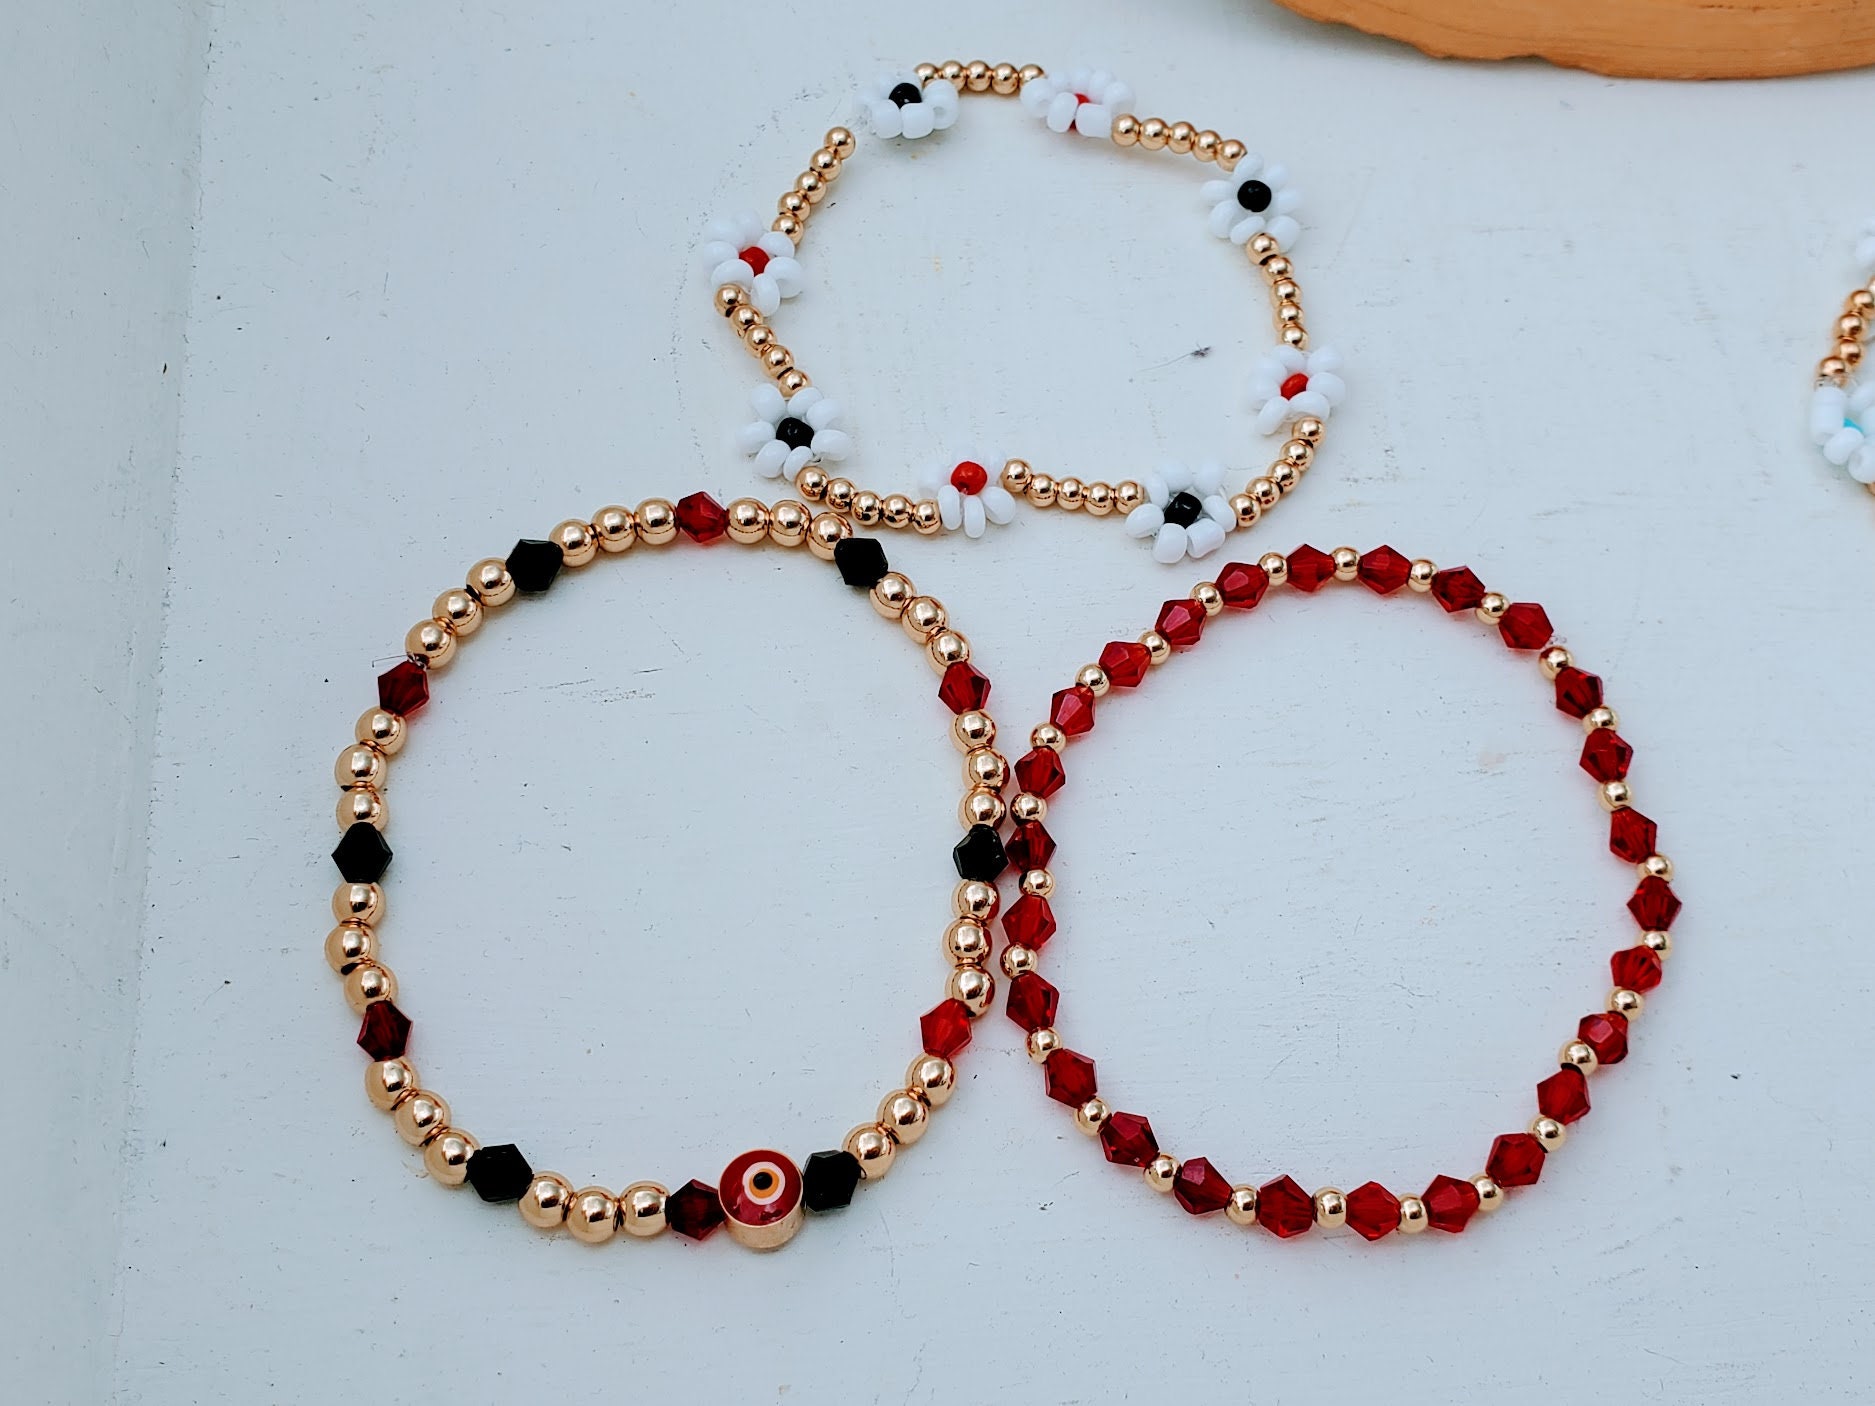 5PCS, Turkish Crystal Eye Bead Bracelets for Women Jewelry Trendy